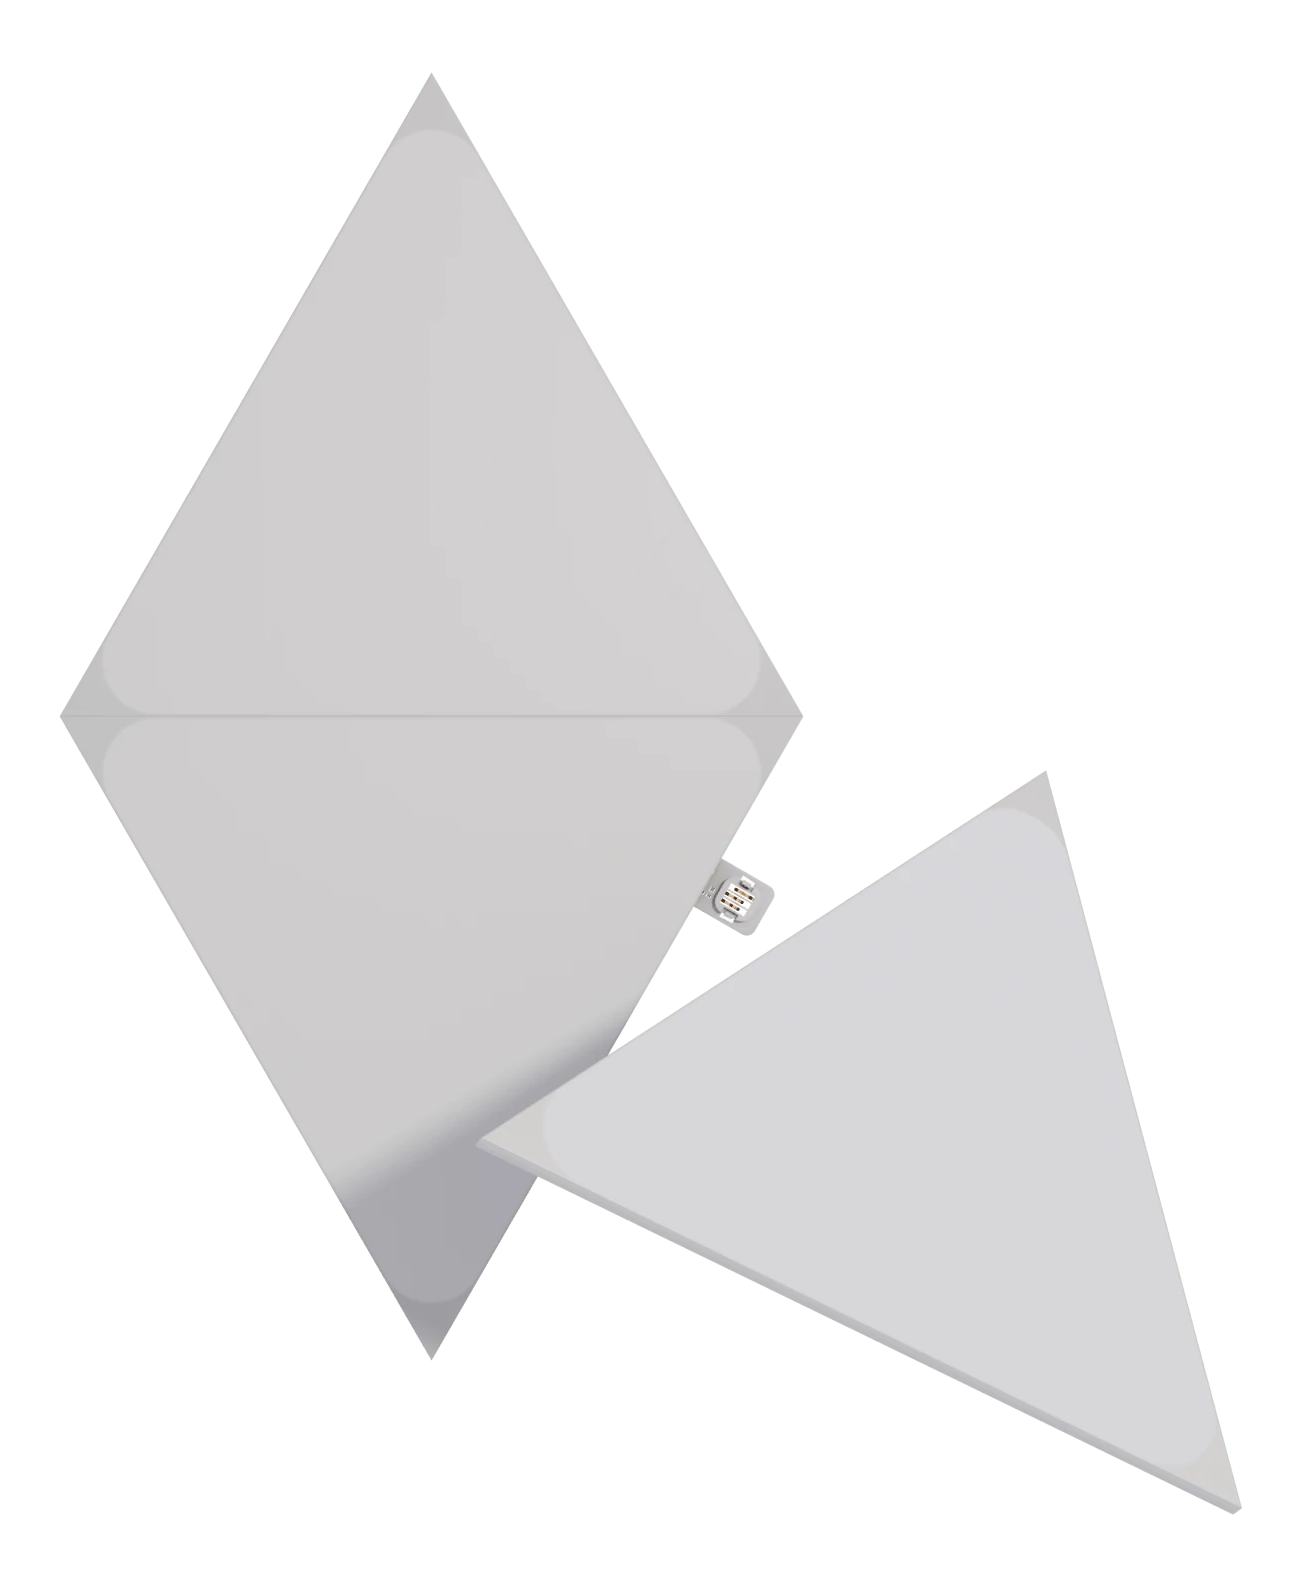 NANOLEAF Shapes Triangles Expansion Pack - Illuminazione interna collegata in rete (Bianco)